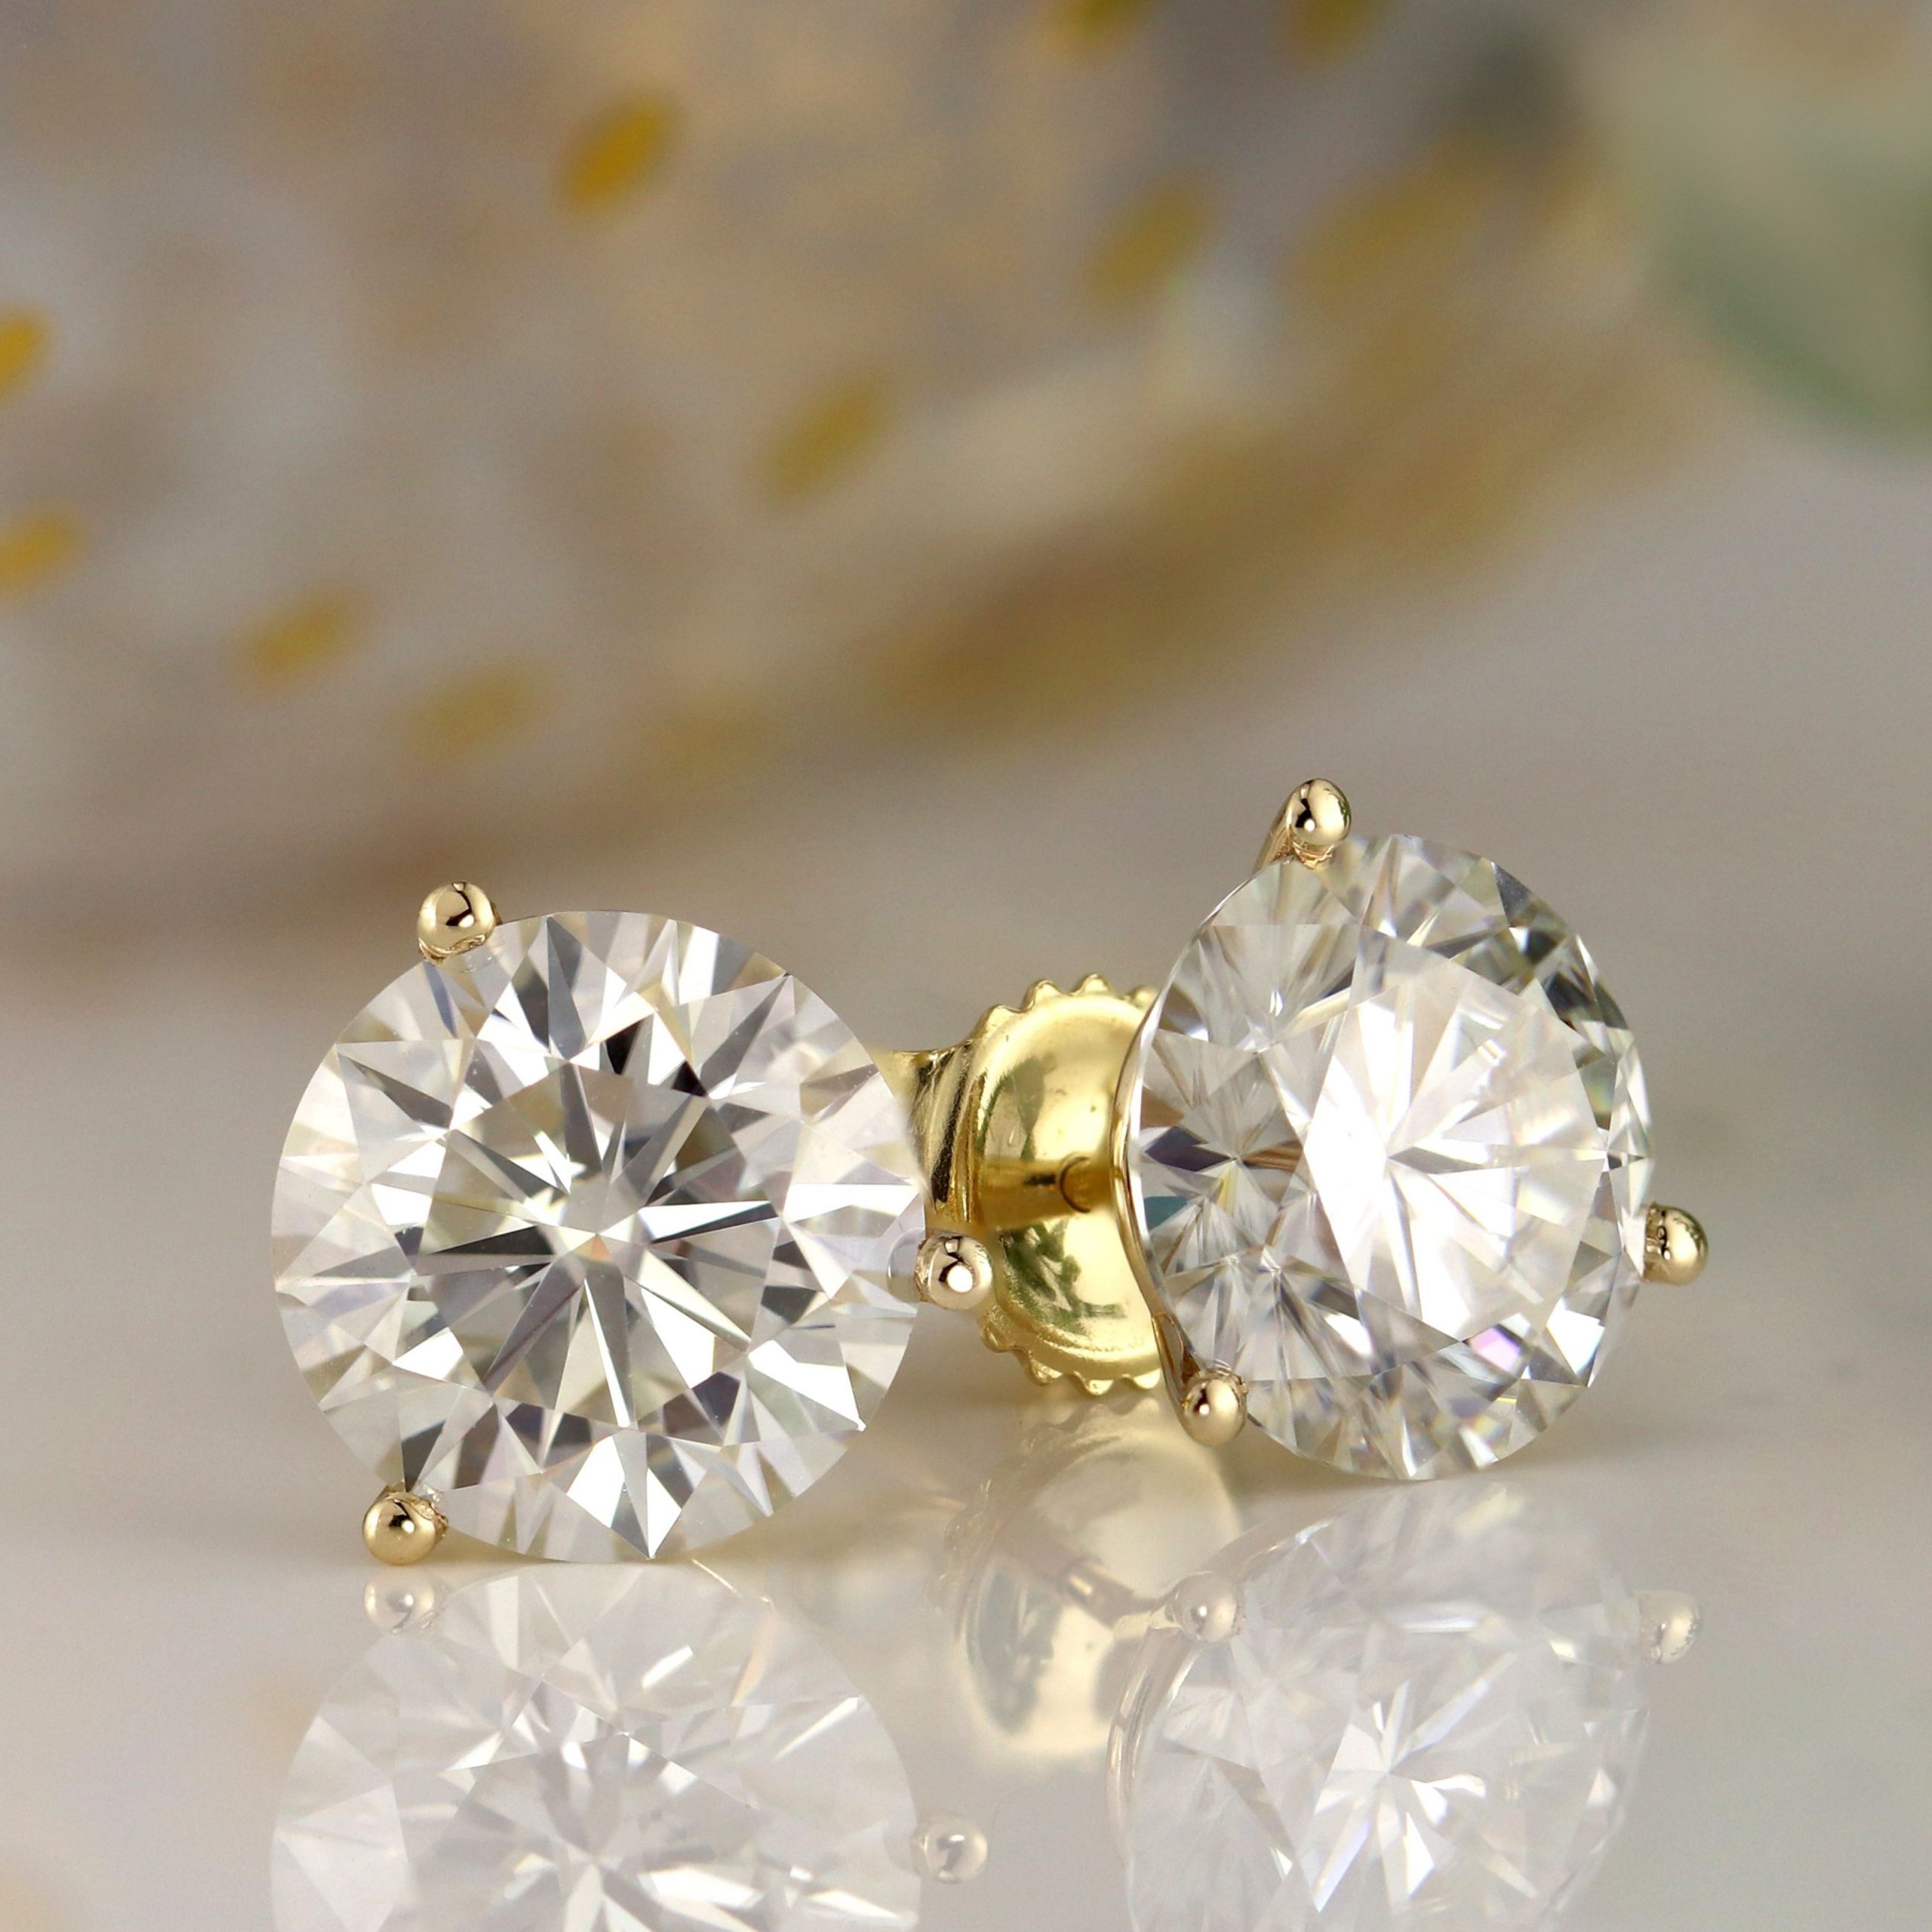 Diamond Stud vs. Moissanite Stud Earrings: Why Each Sparkle Differently